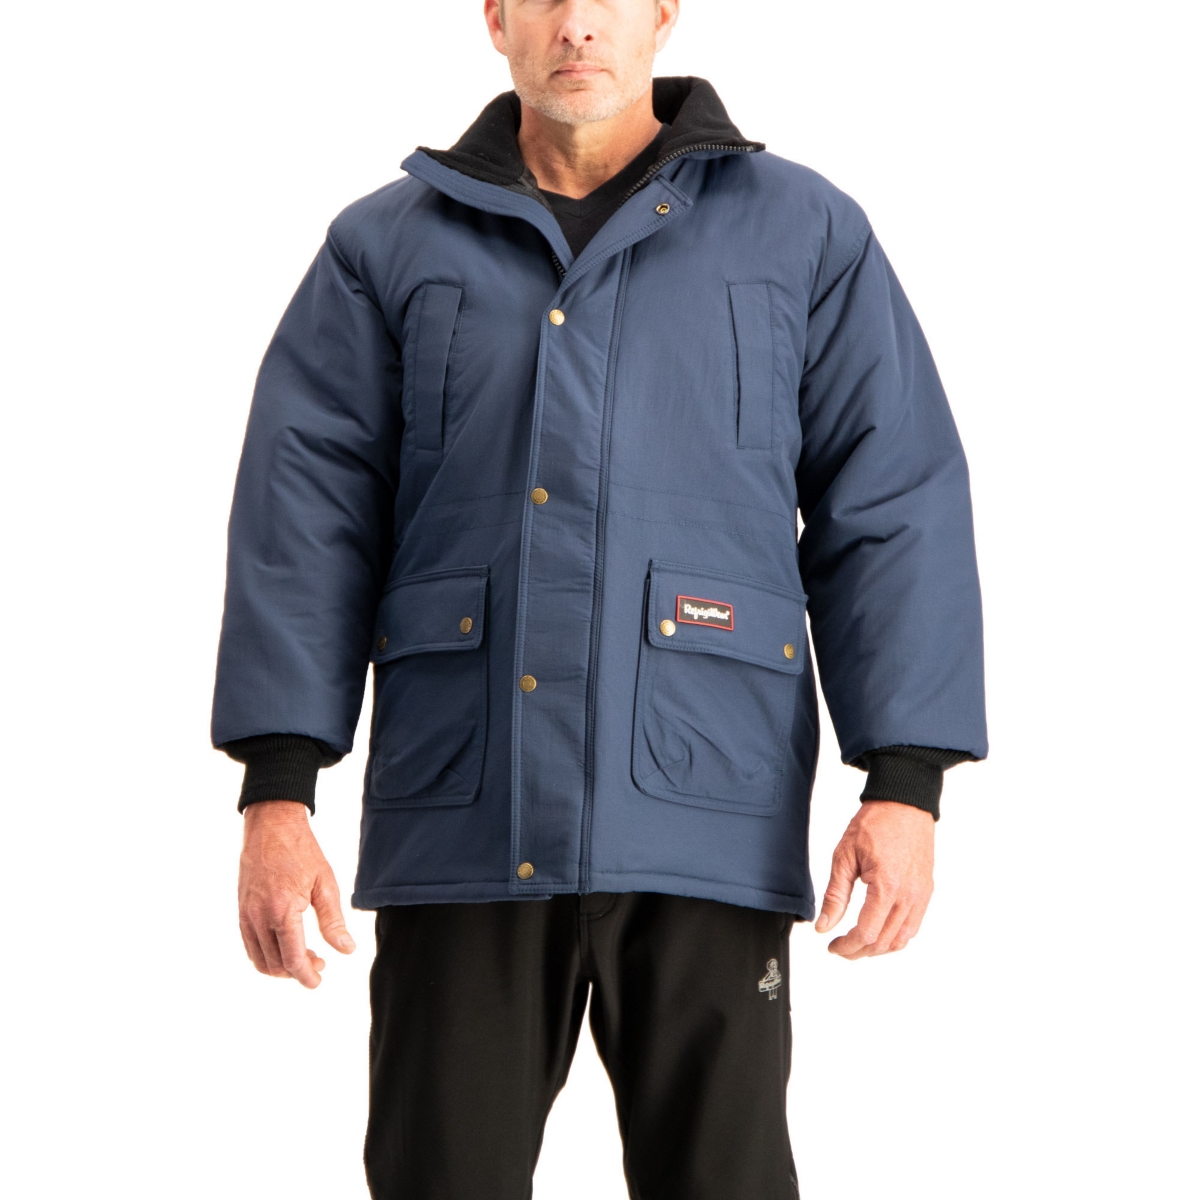 Men's ChillBreaker Lightweight Insulated Parka Jacket Workwear Coat - Navy